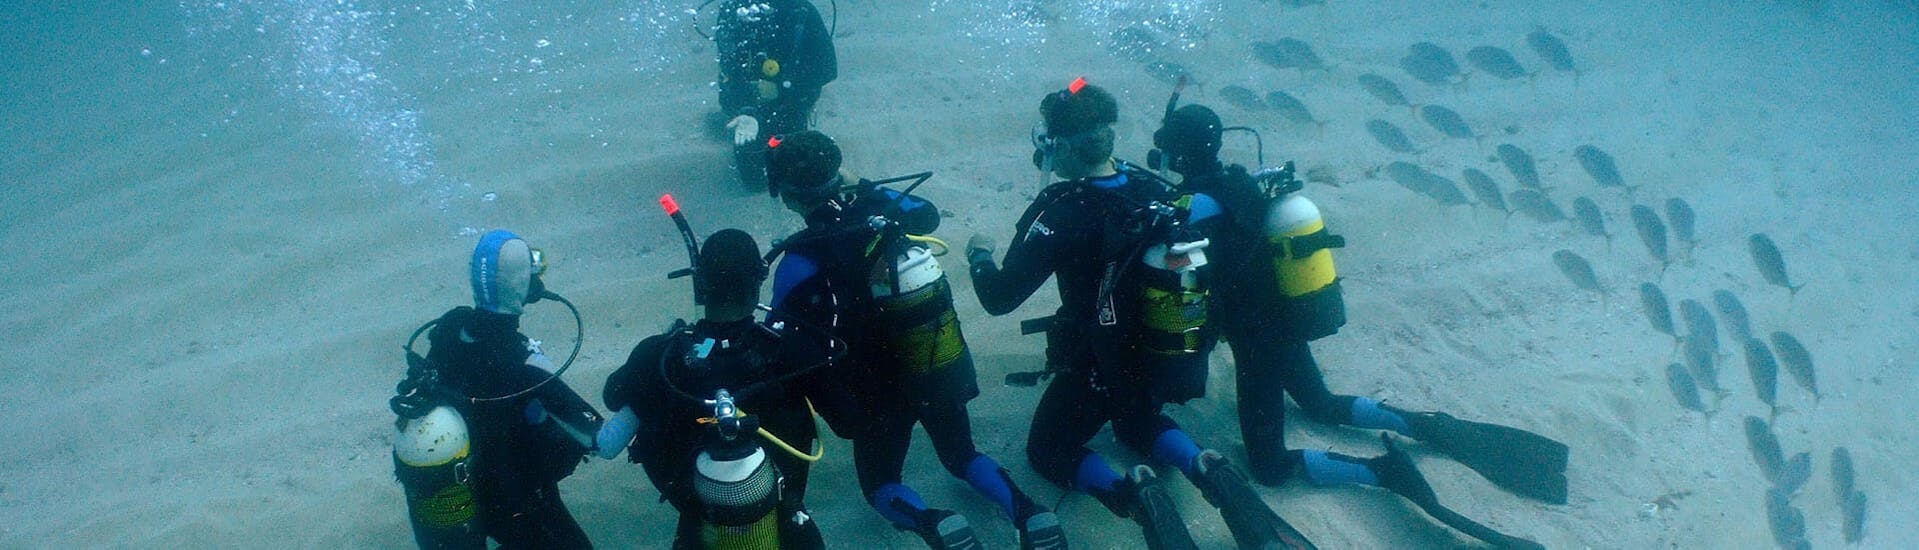 A group diving during a Trial Scuba Diving in l'Atmella de Mar with Nautic Parc Costa Daurada.